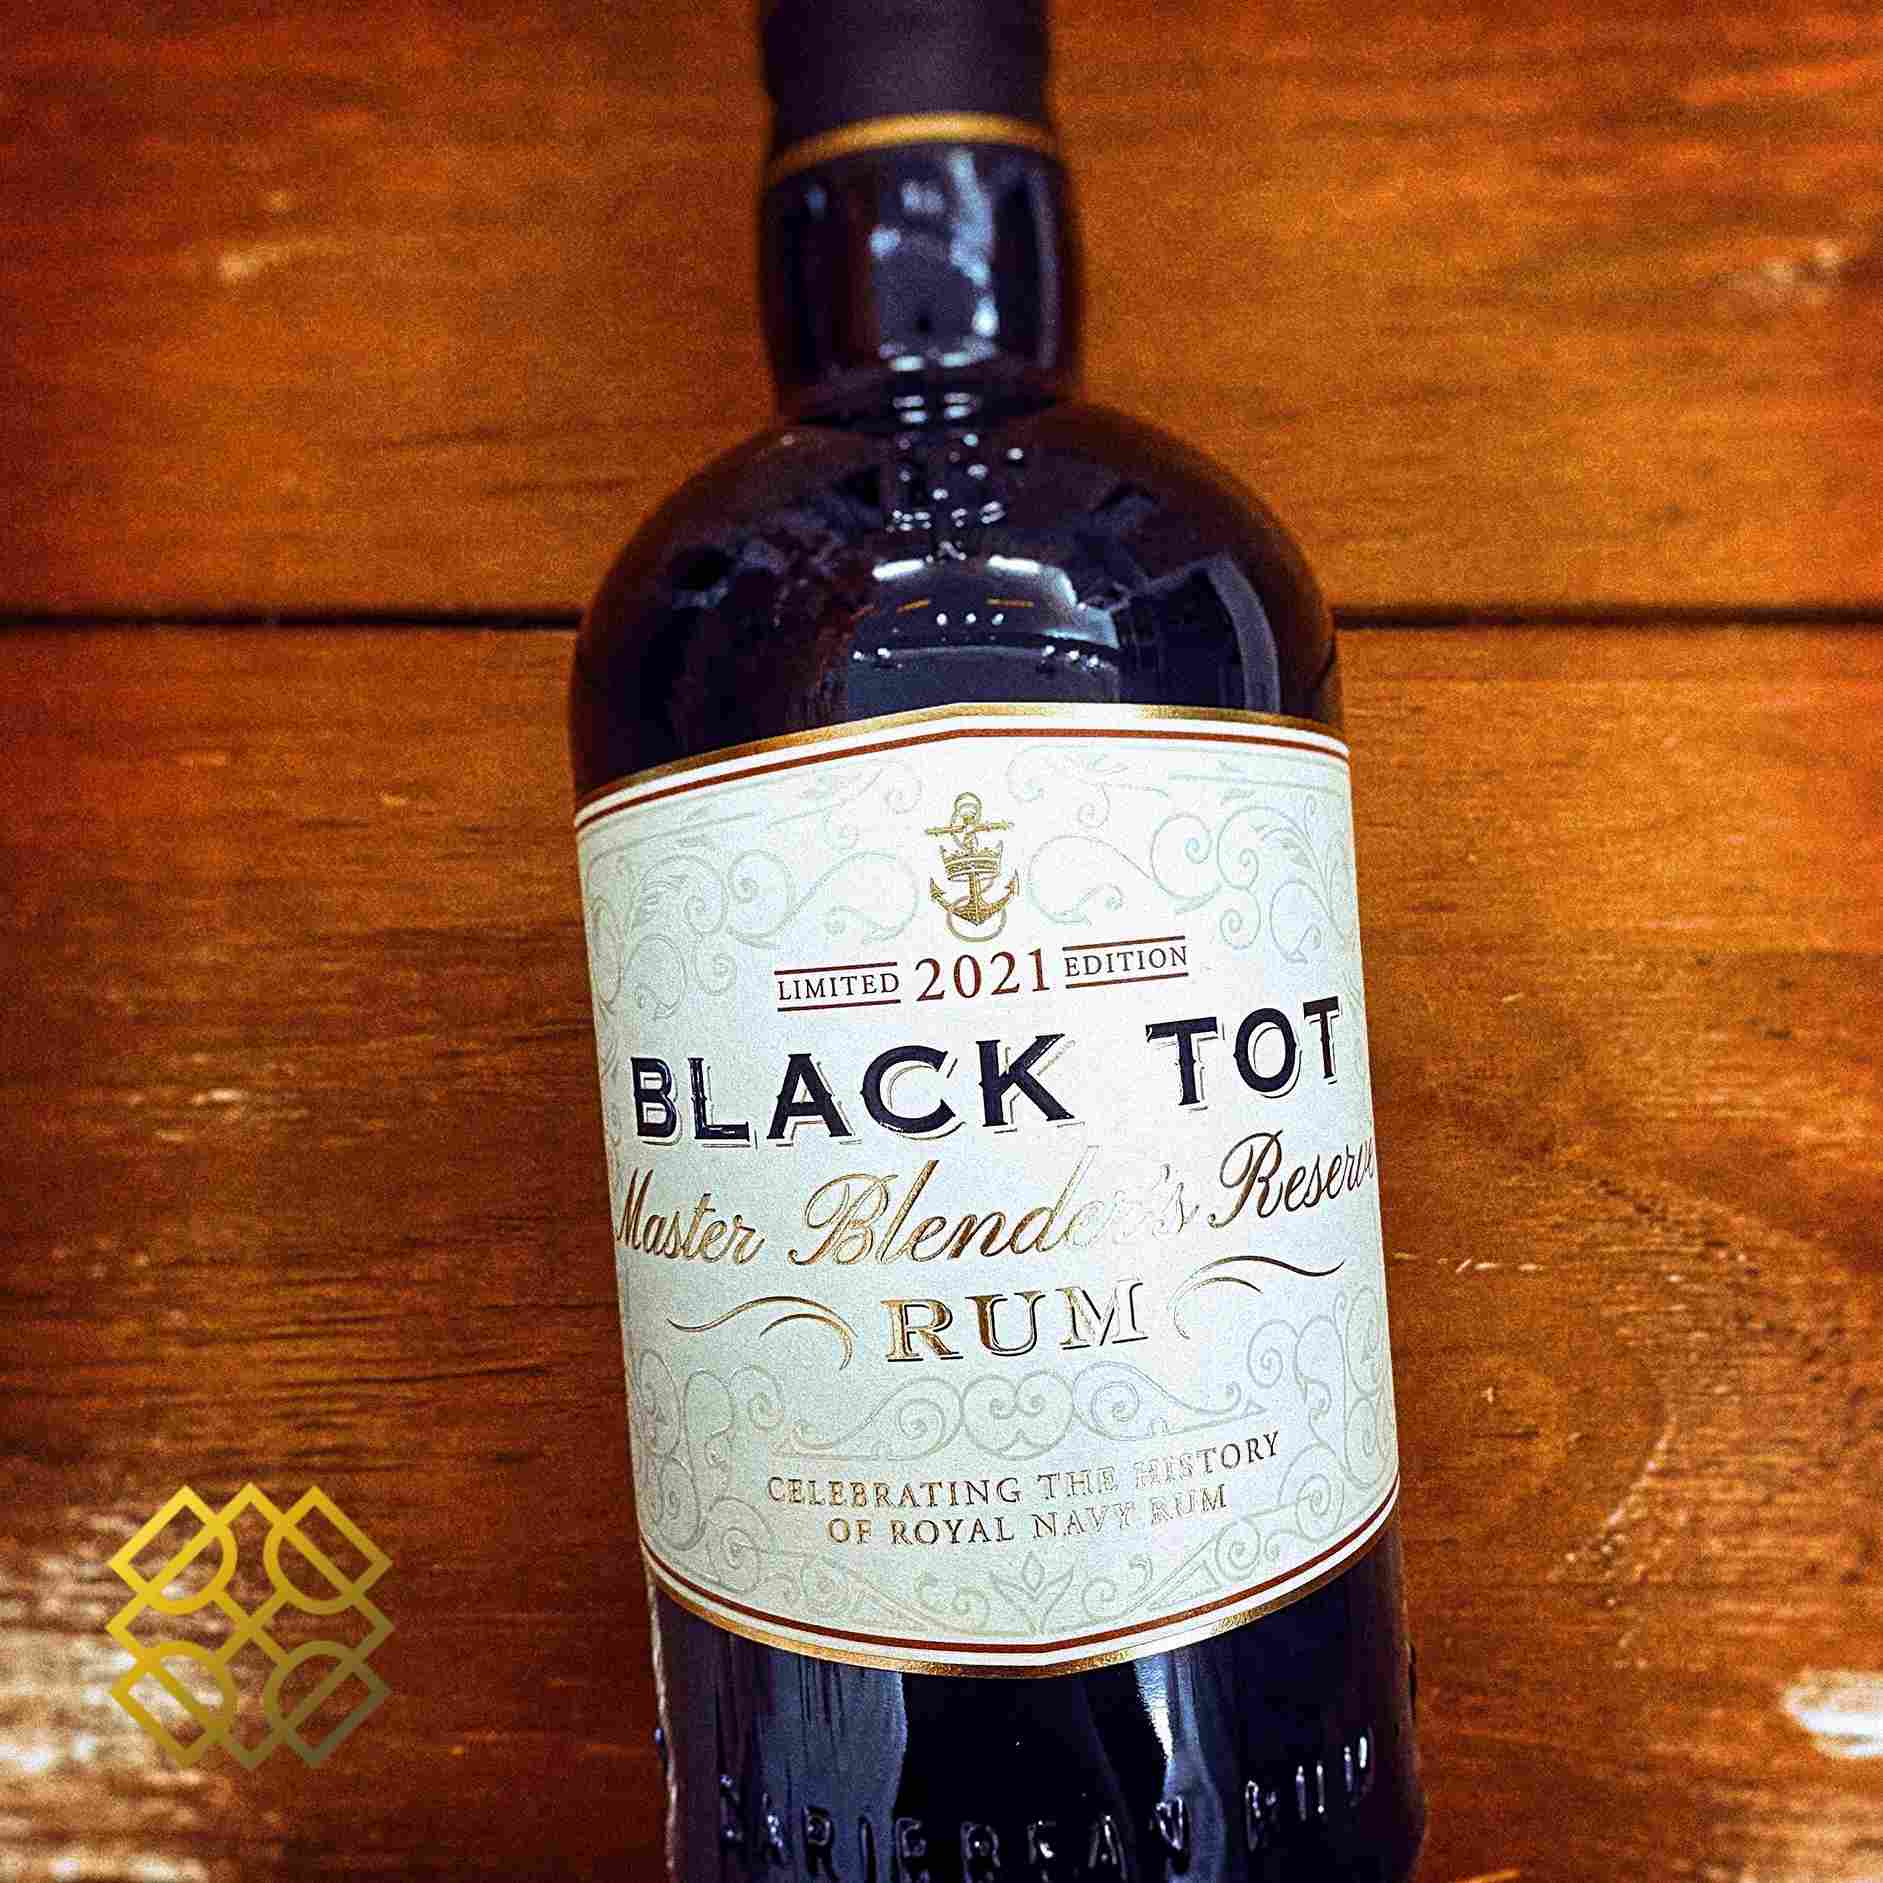 Black Tot - Master Blender's Reserve Rum 2021,54.5% - Rum